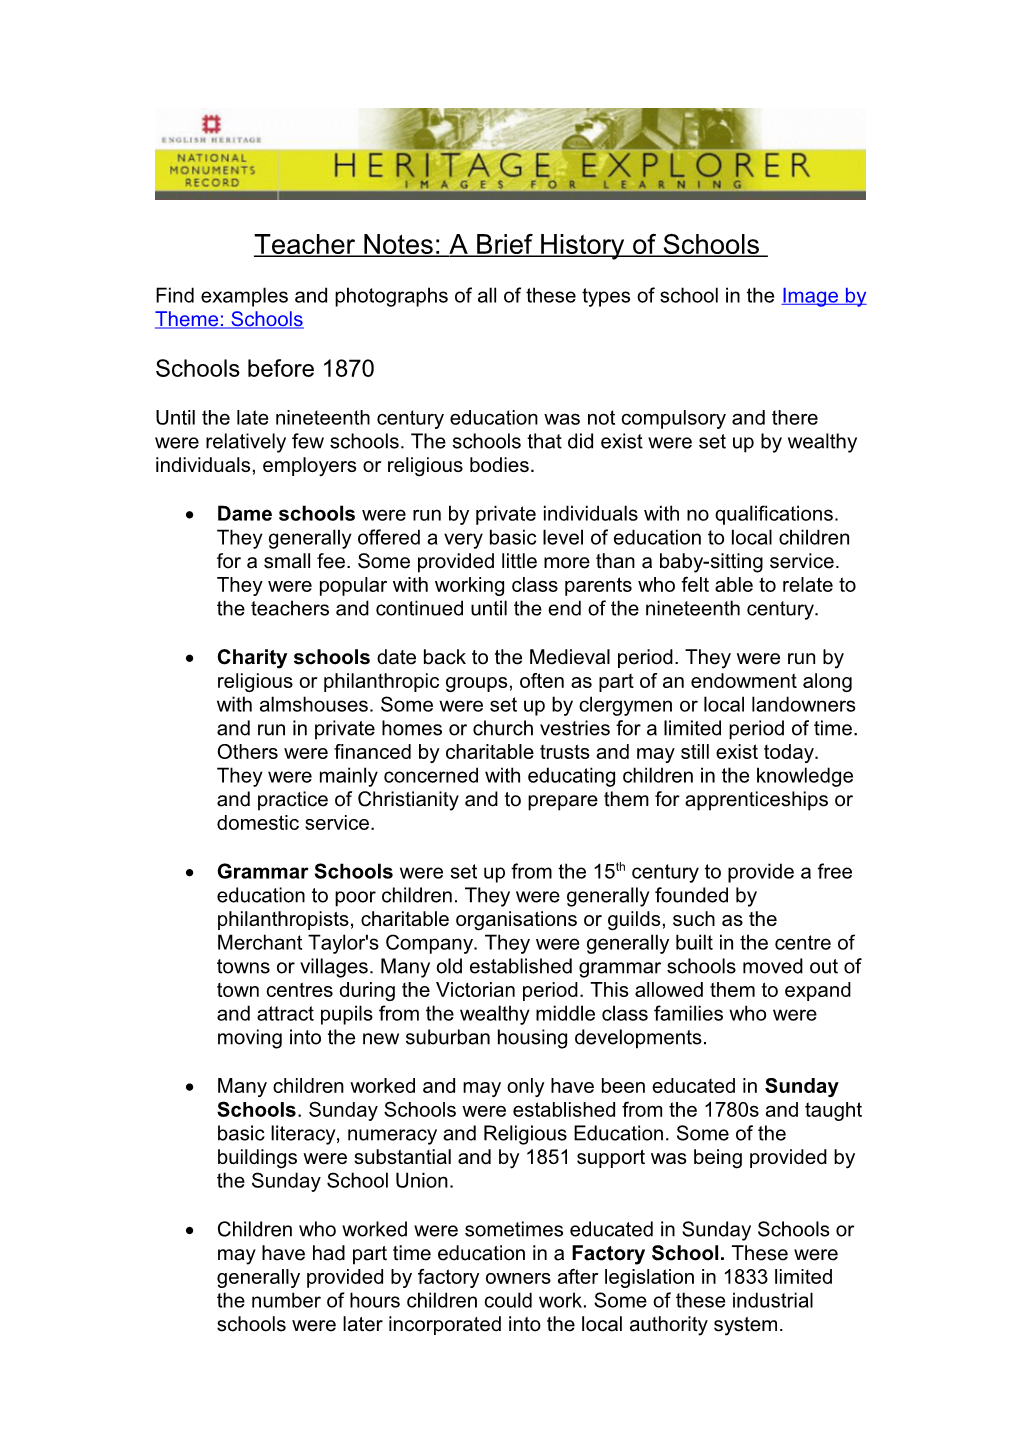 Teacher Notes: a Brief History of Schools